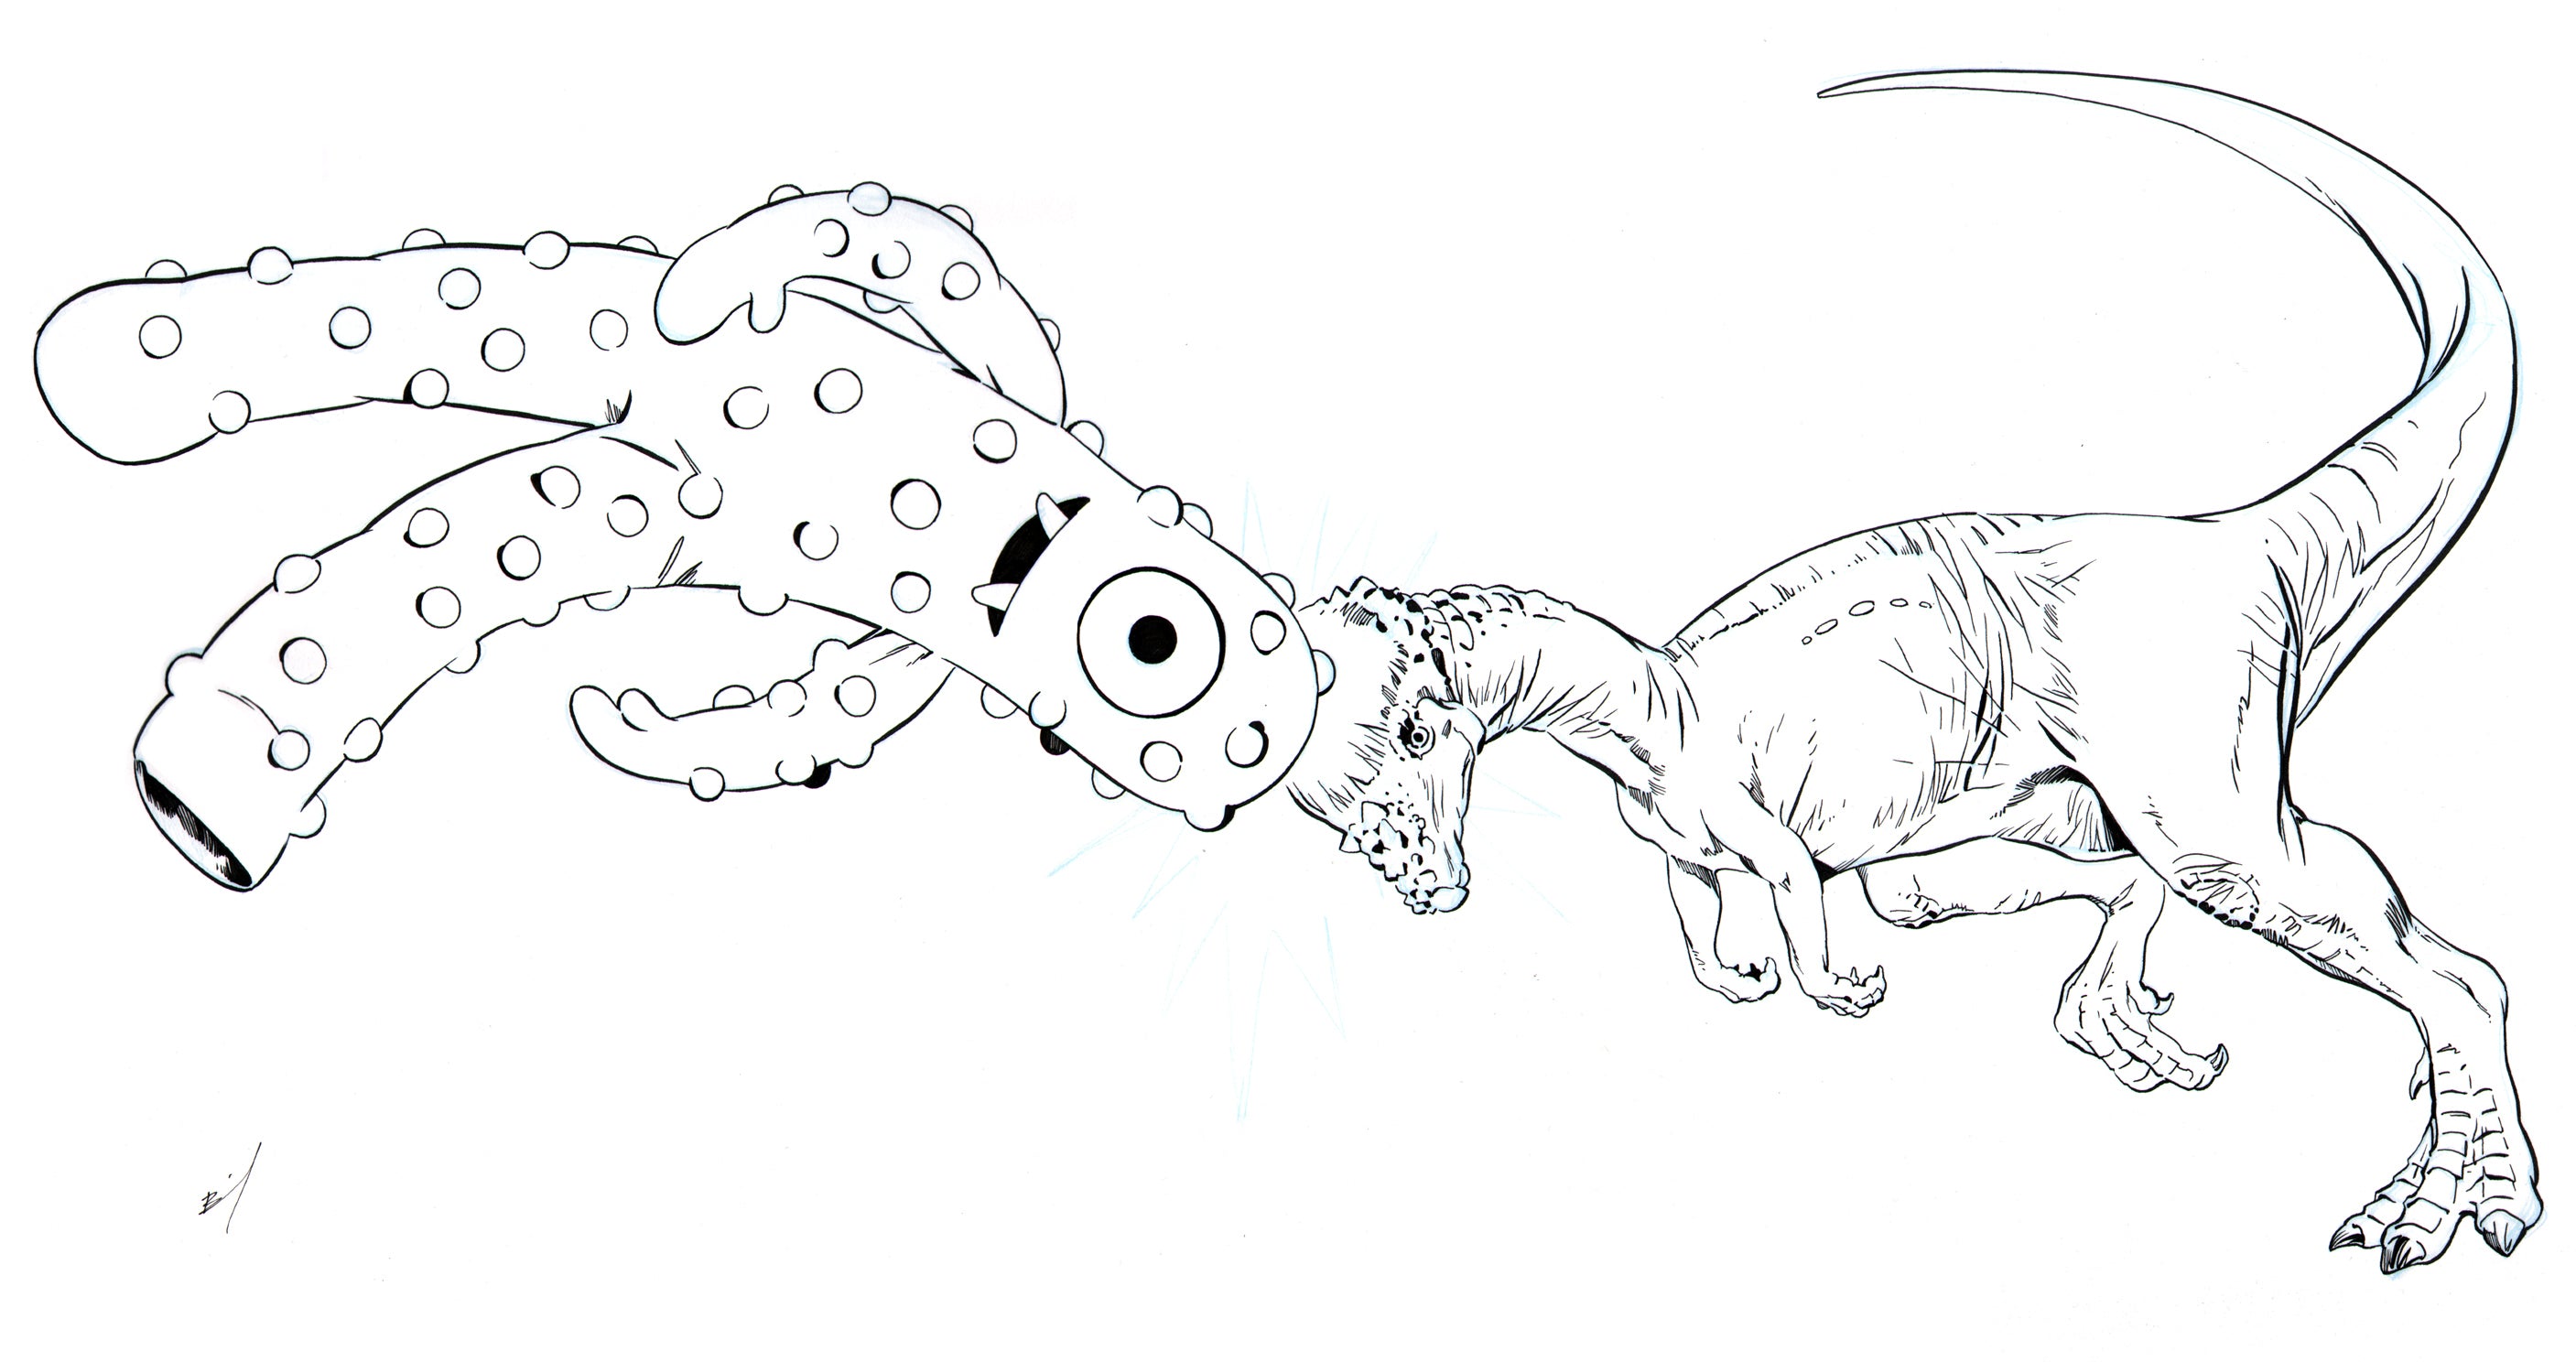 Muno headbutting a pachycephalosaurus